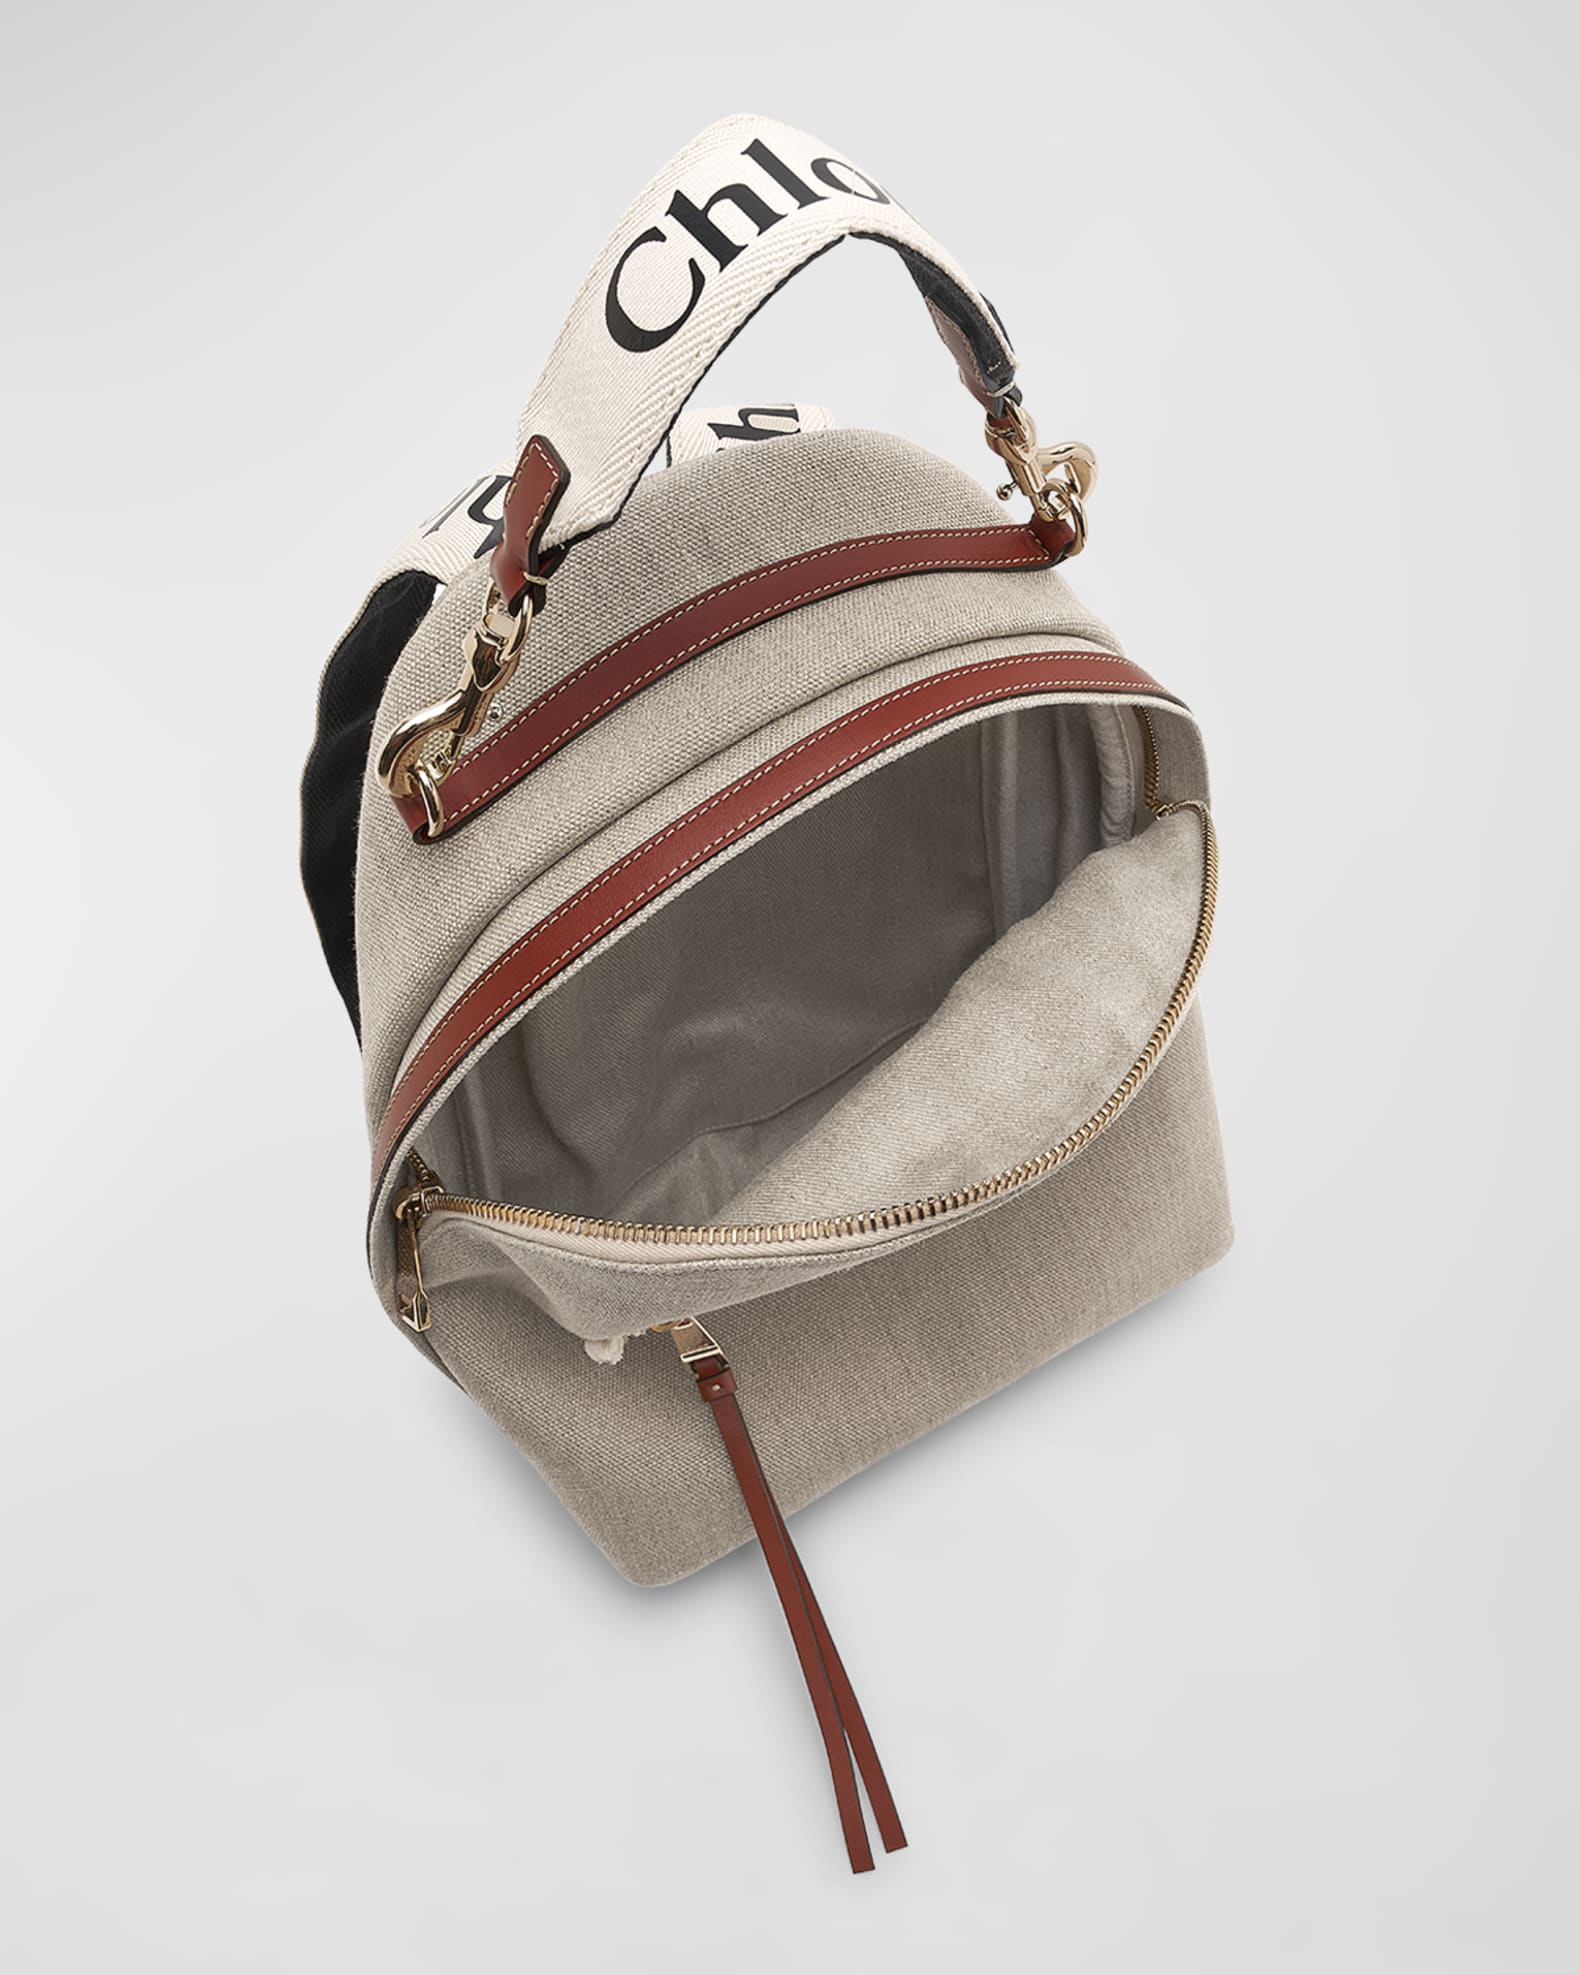 CHLOÉ, Woody Linen Canvas Backpack, Women